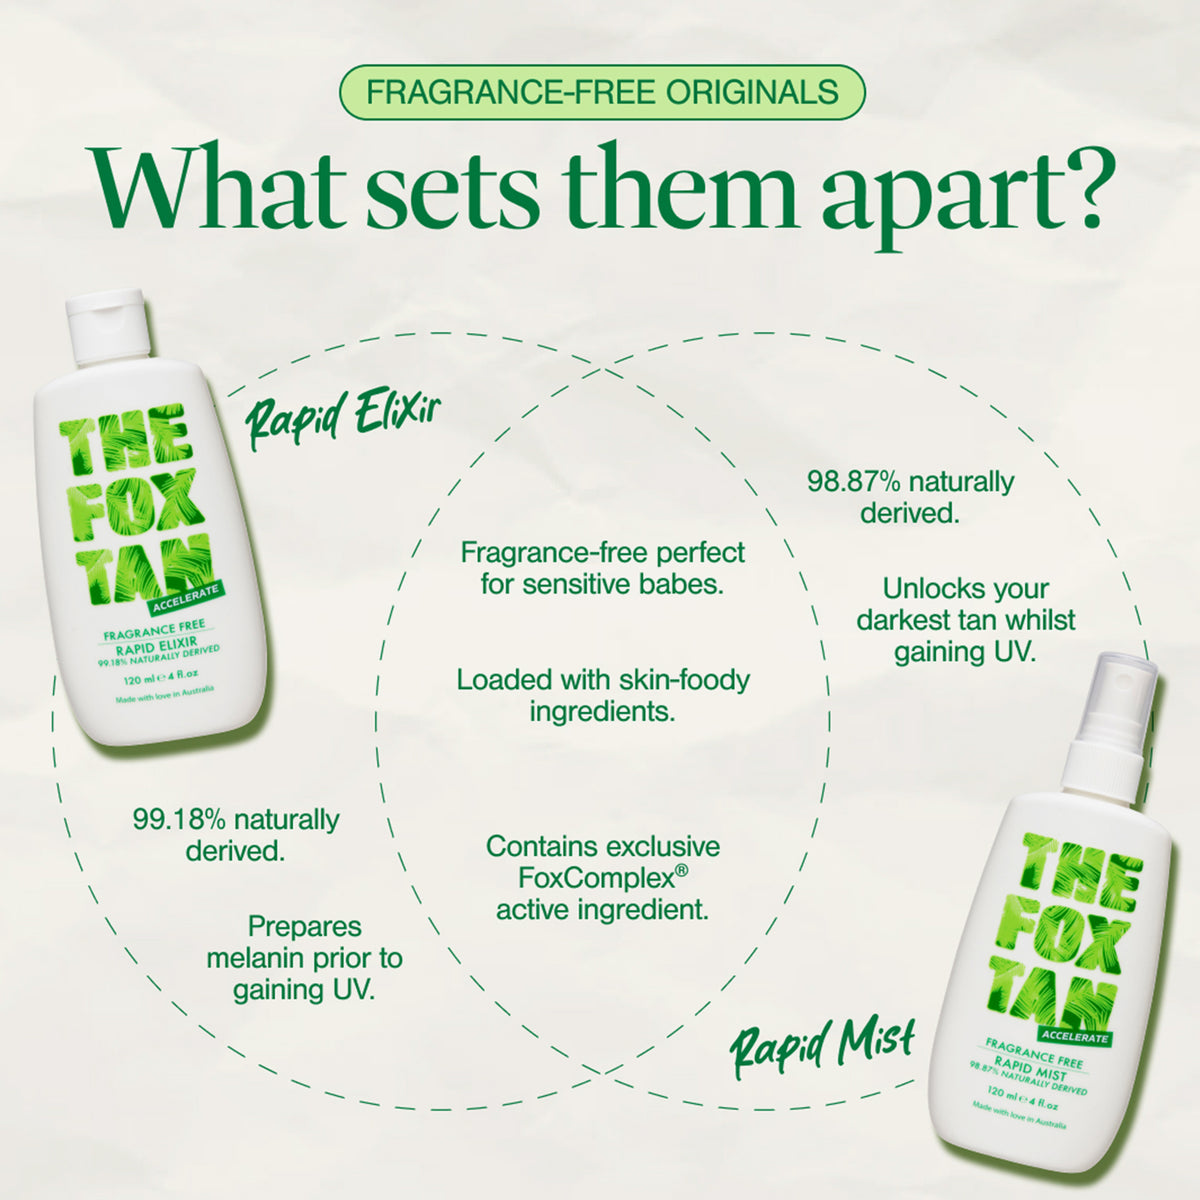 Fragrance Free Rapid Tanning Elixir